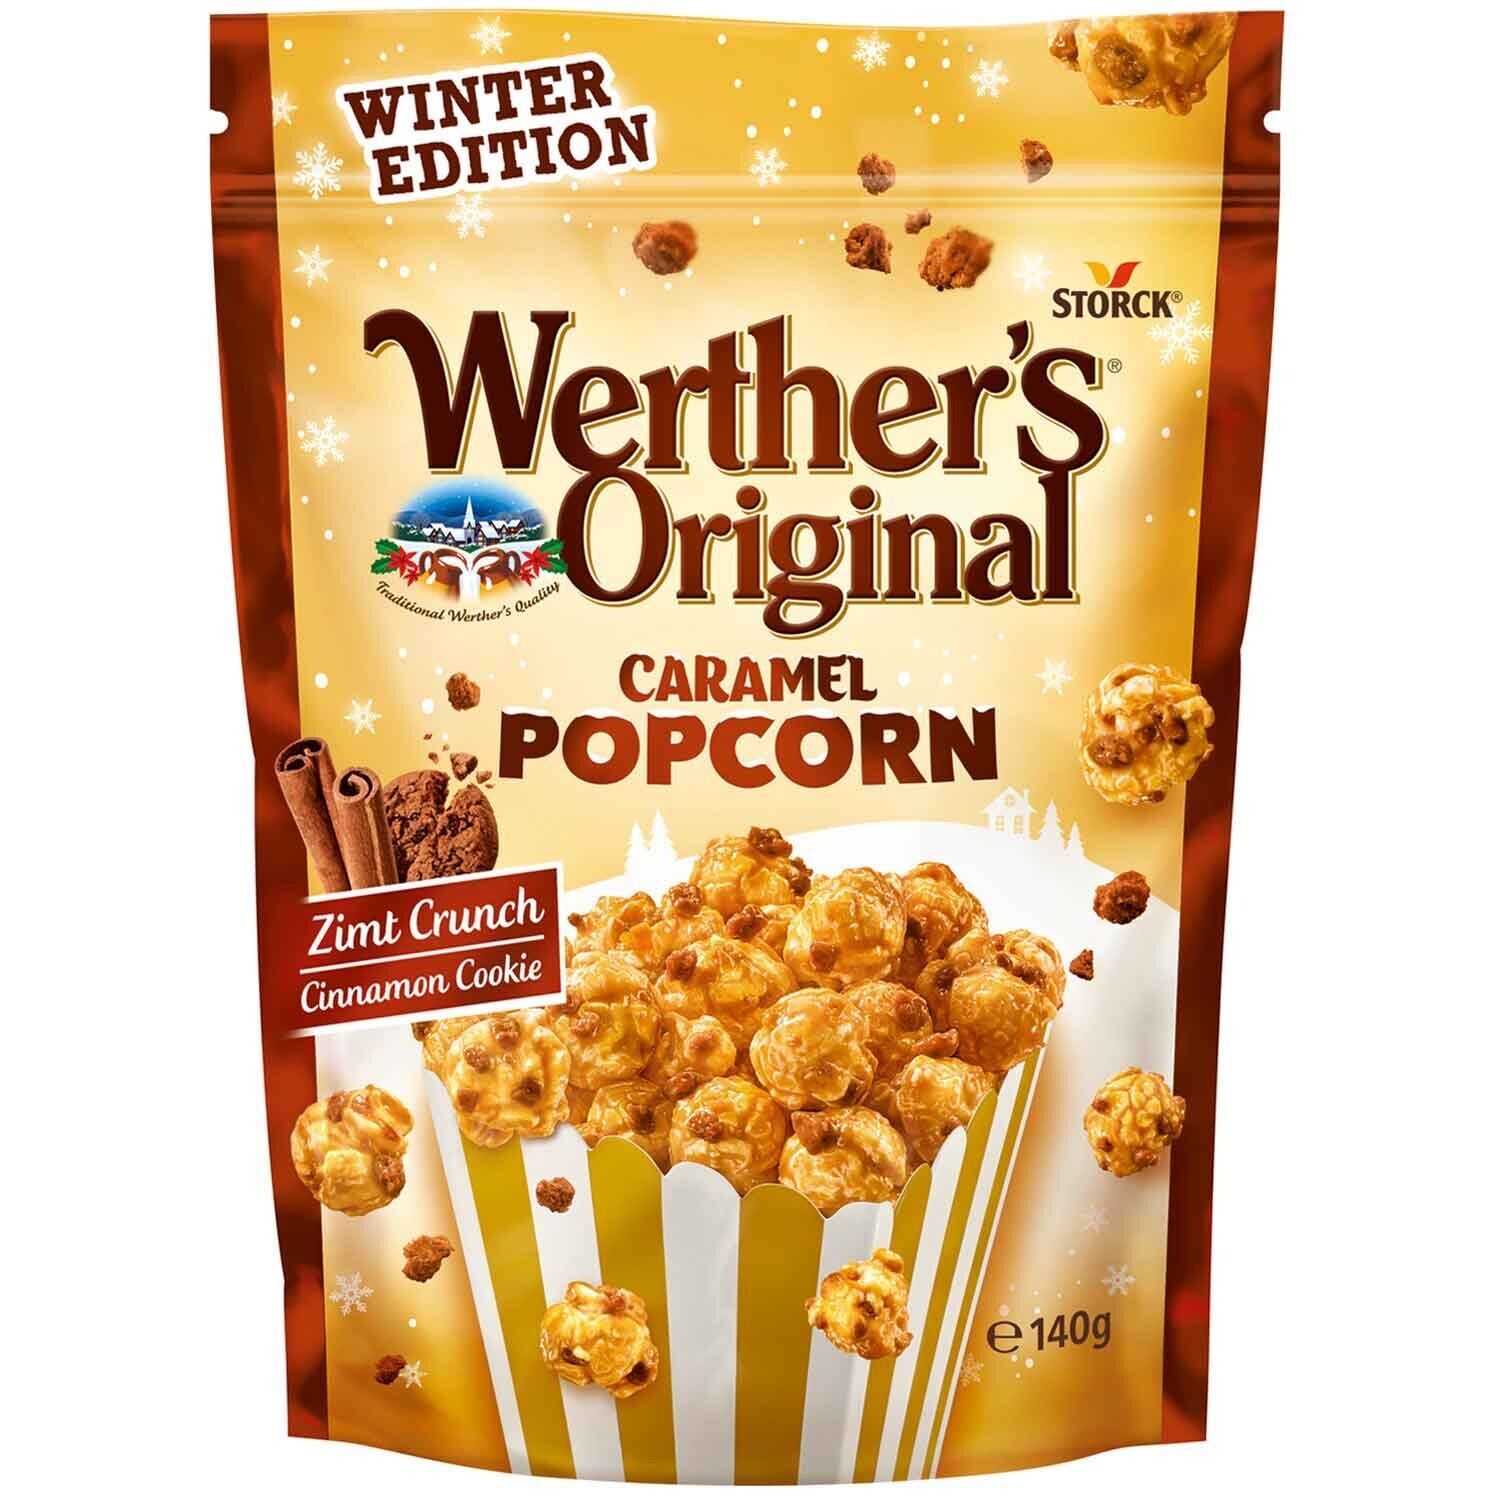 Storck Werther's Original CINNAMON Crunch Popcorn 140g FREE SHIPPING - $9.85